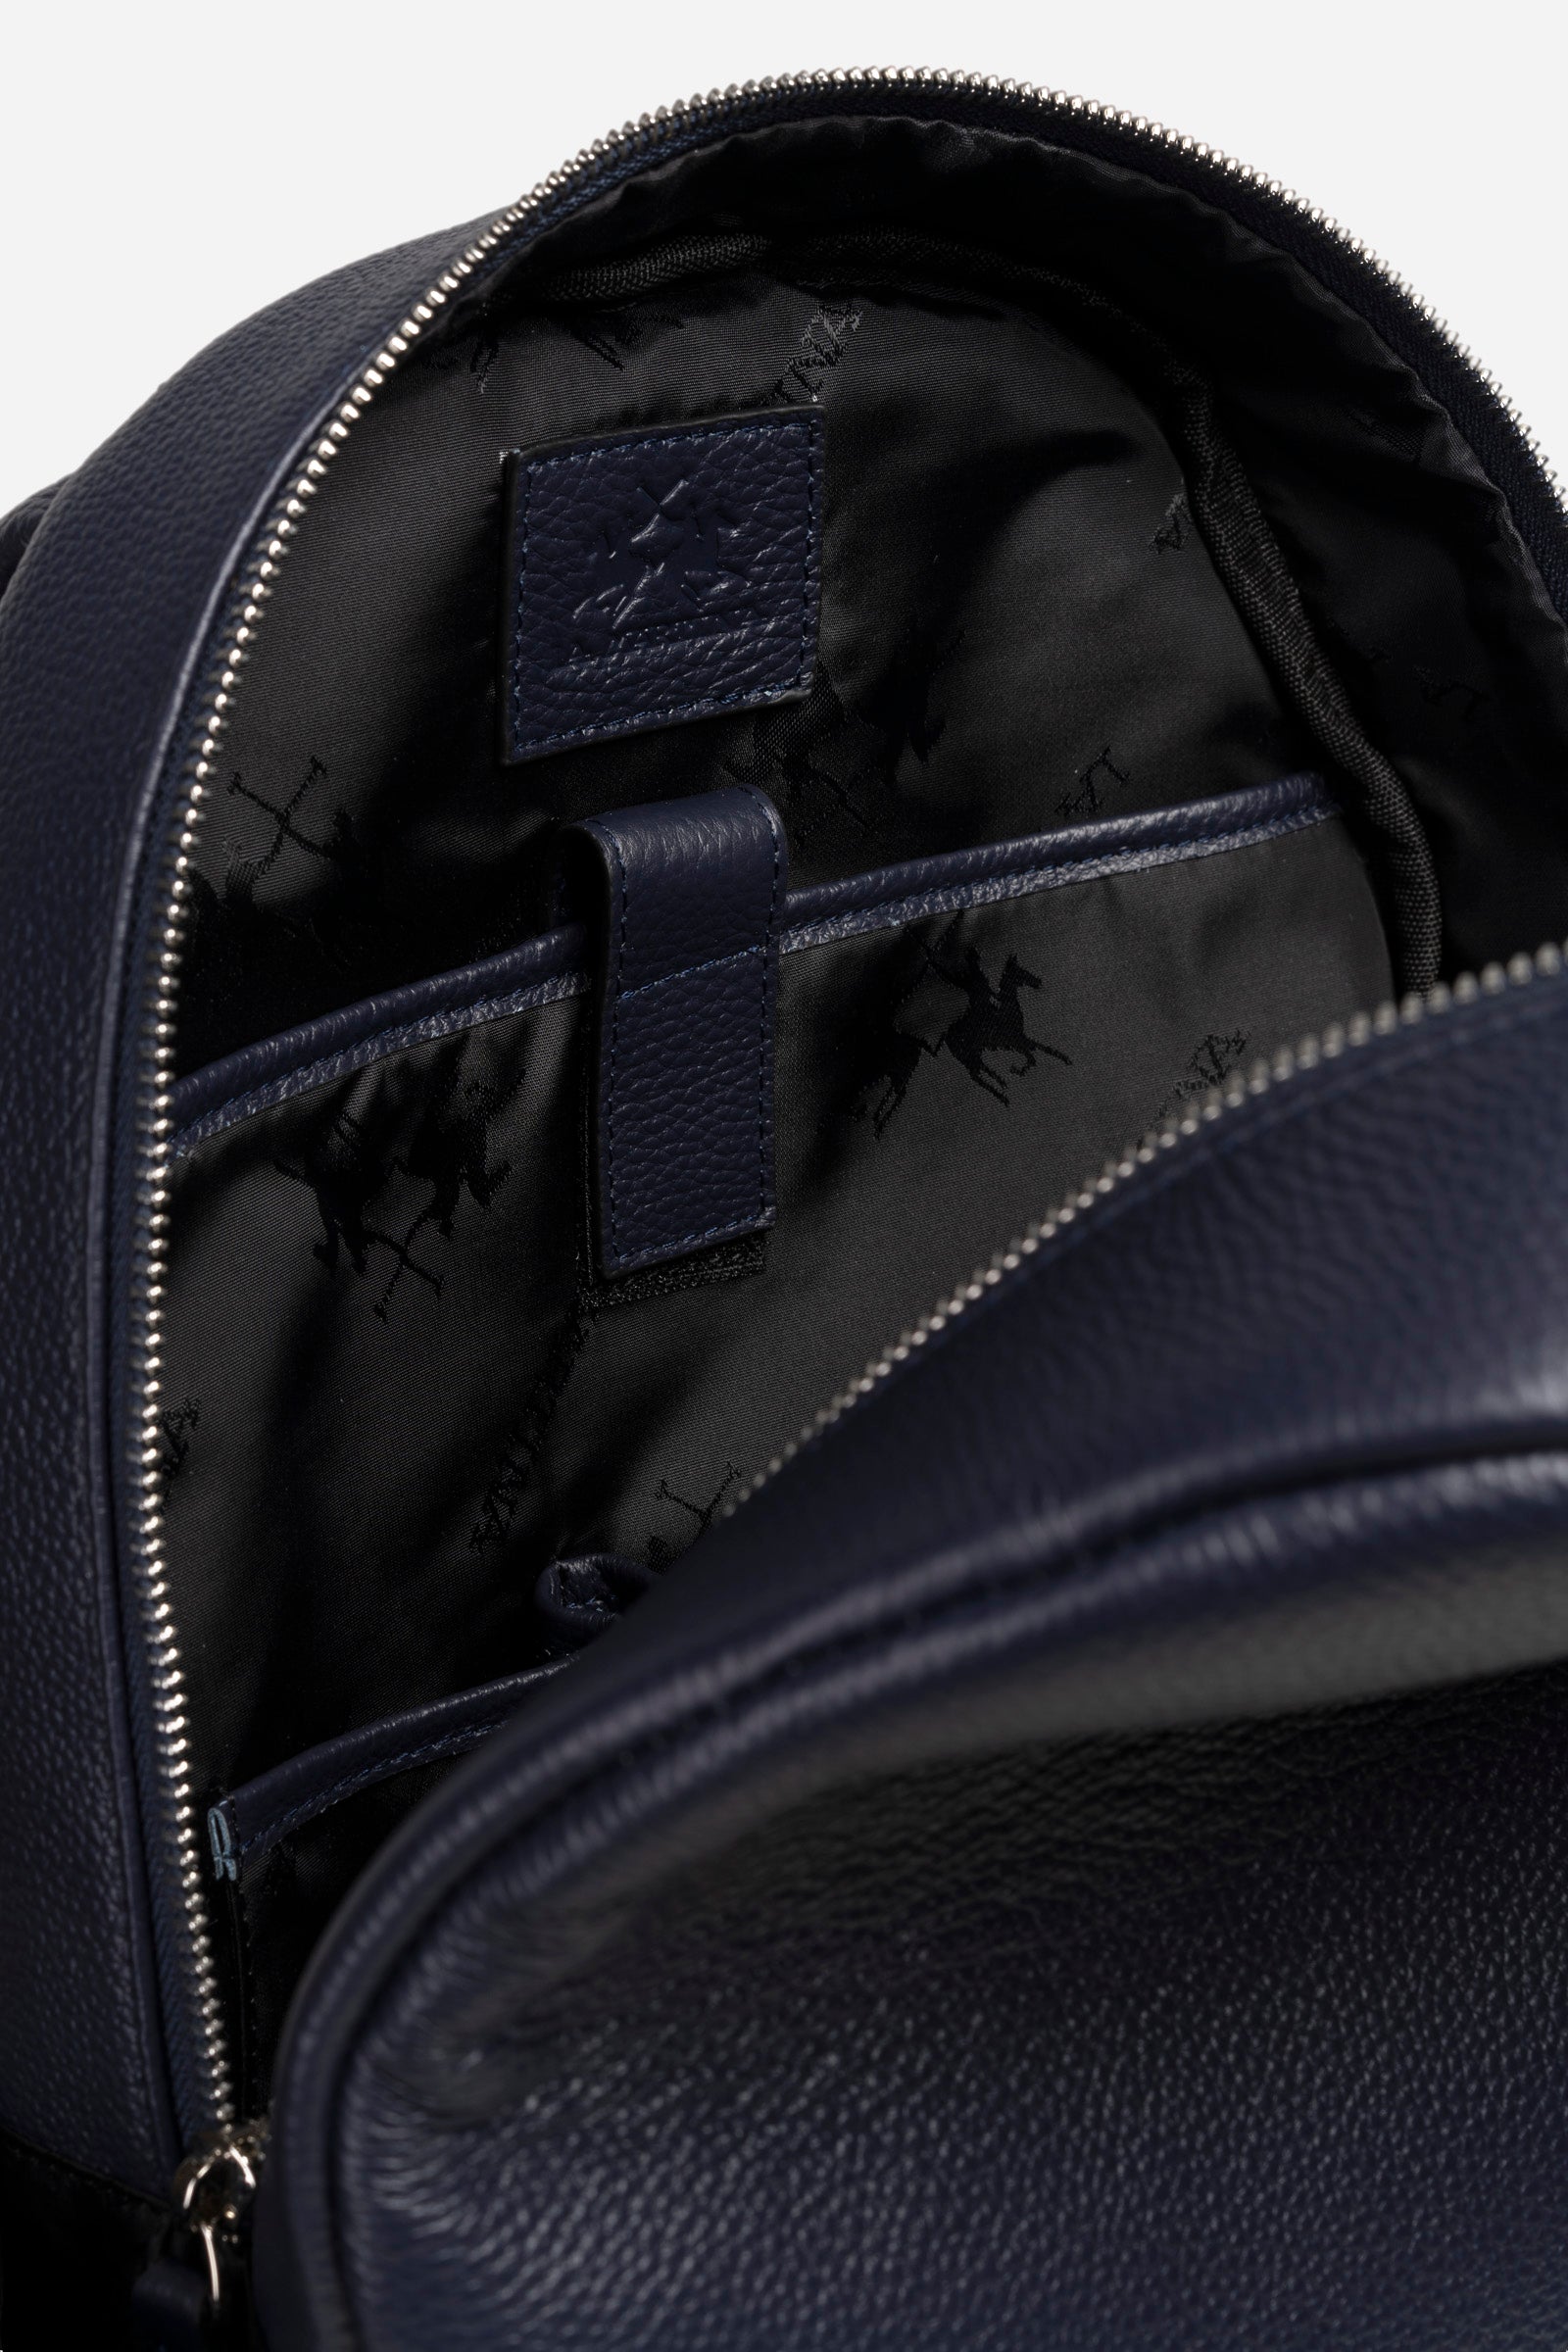 Men's leather backpack - Lorenzo